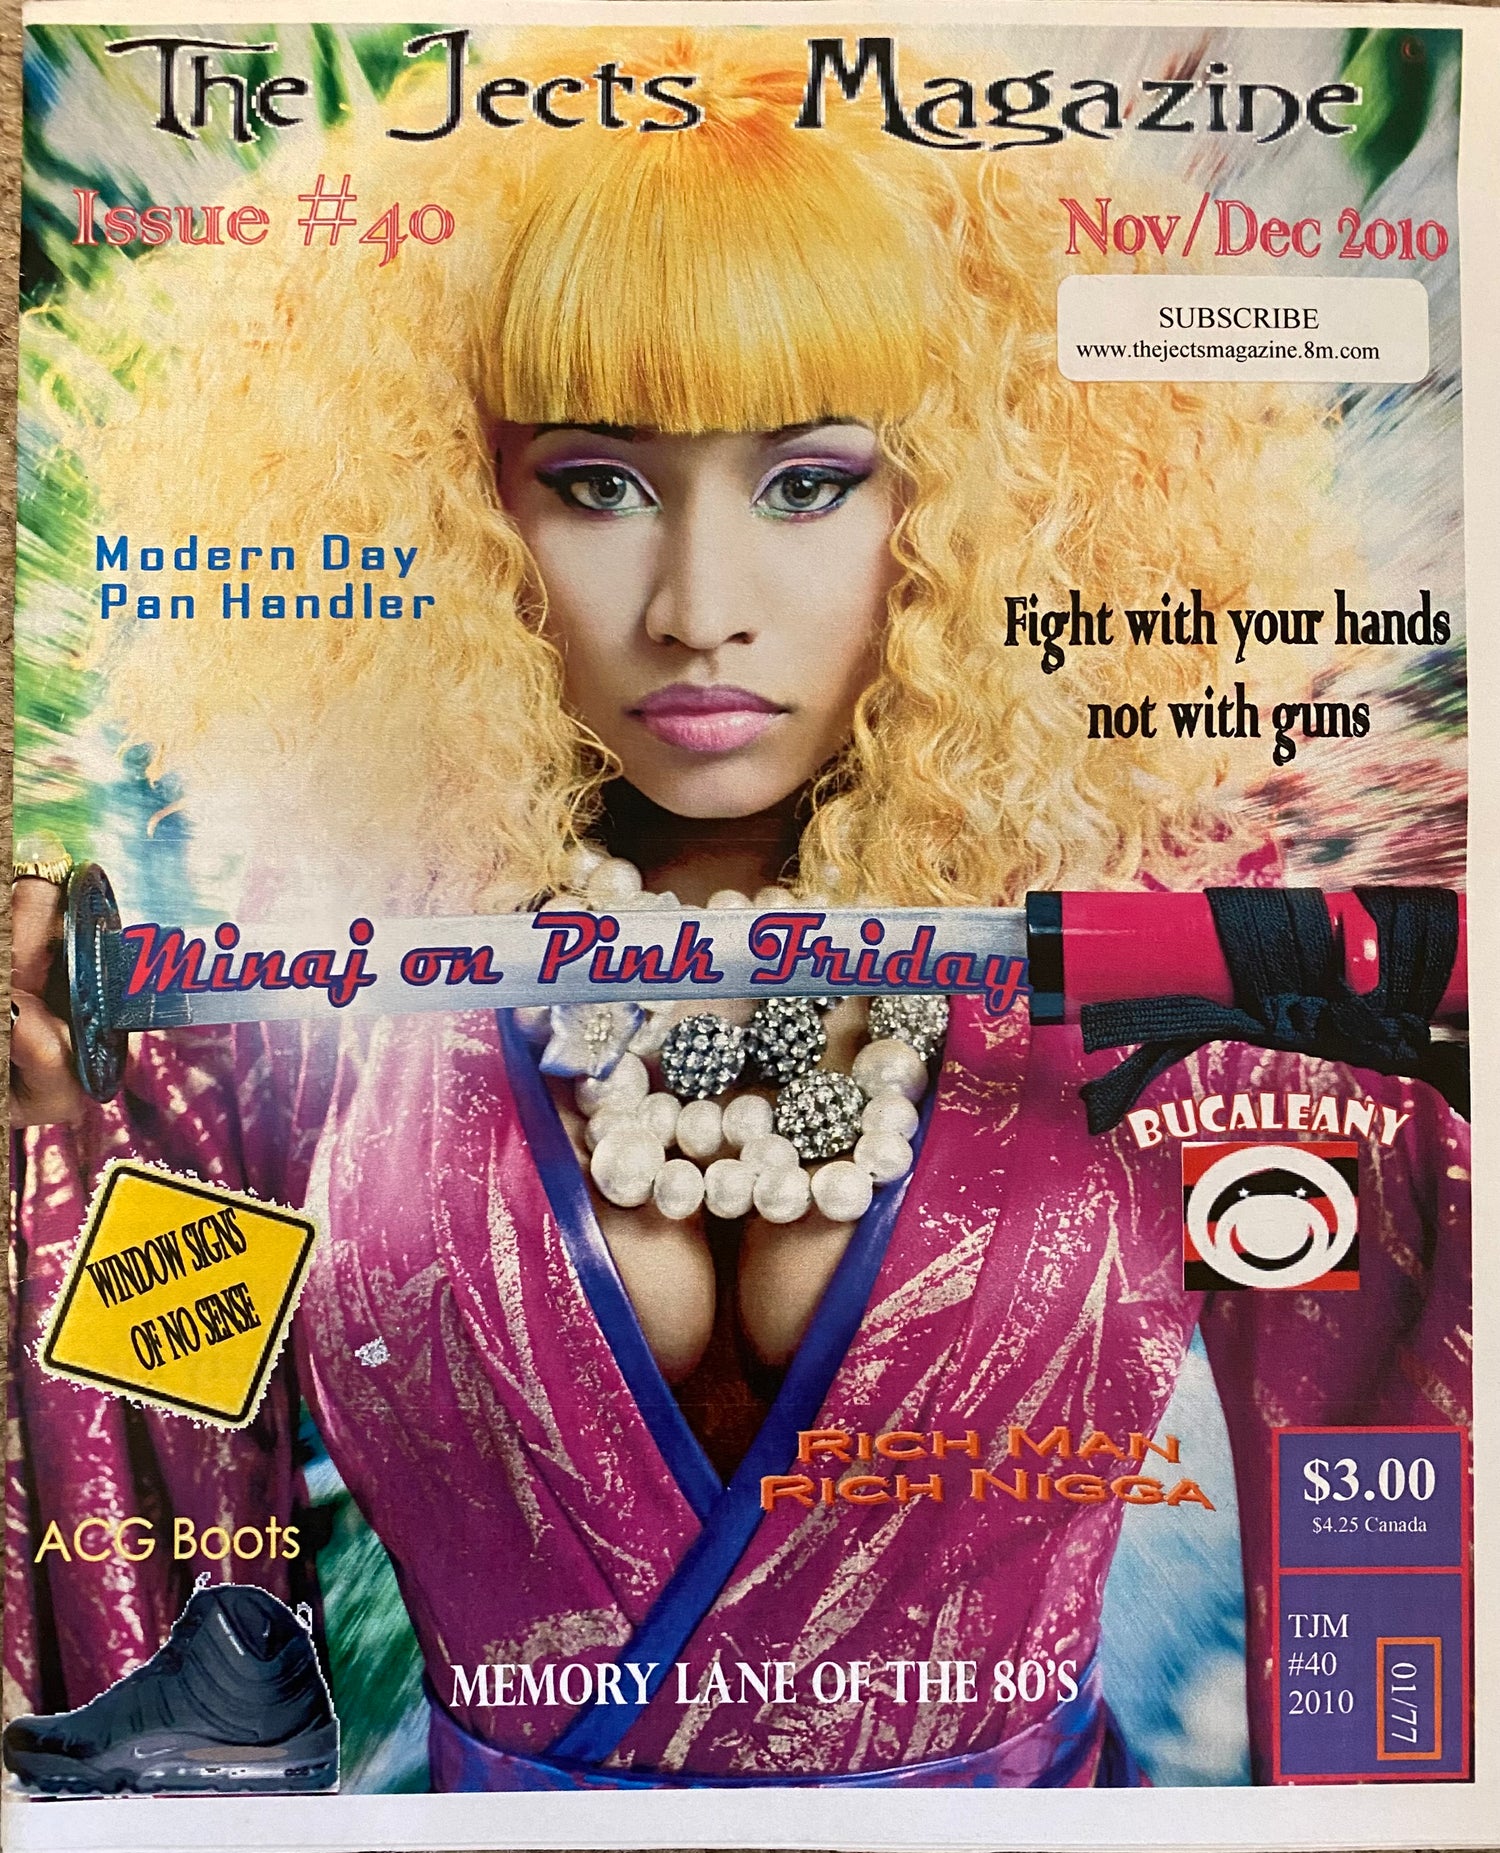 The Jects Magazine Issue 40 Nicki Minaj - MoSneaks Shop Online